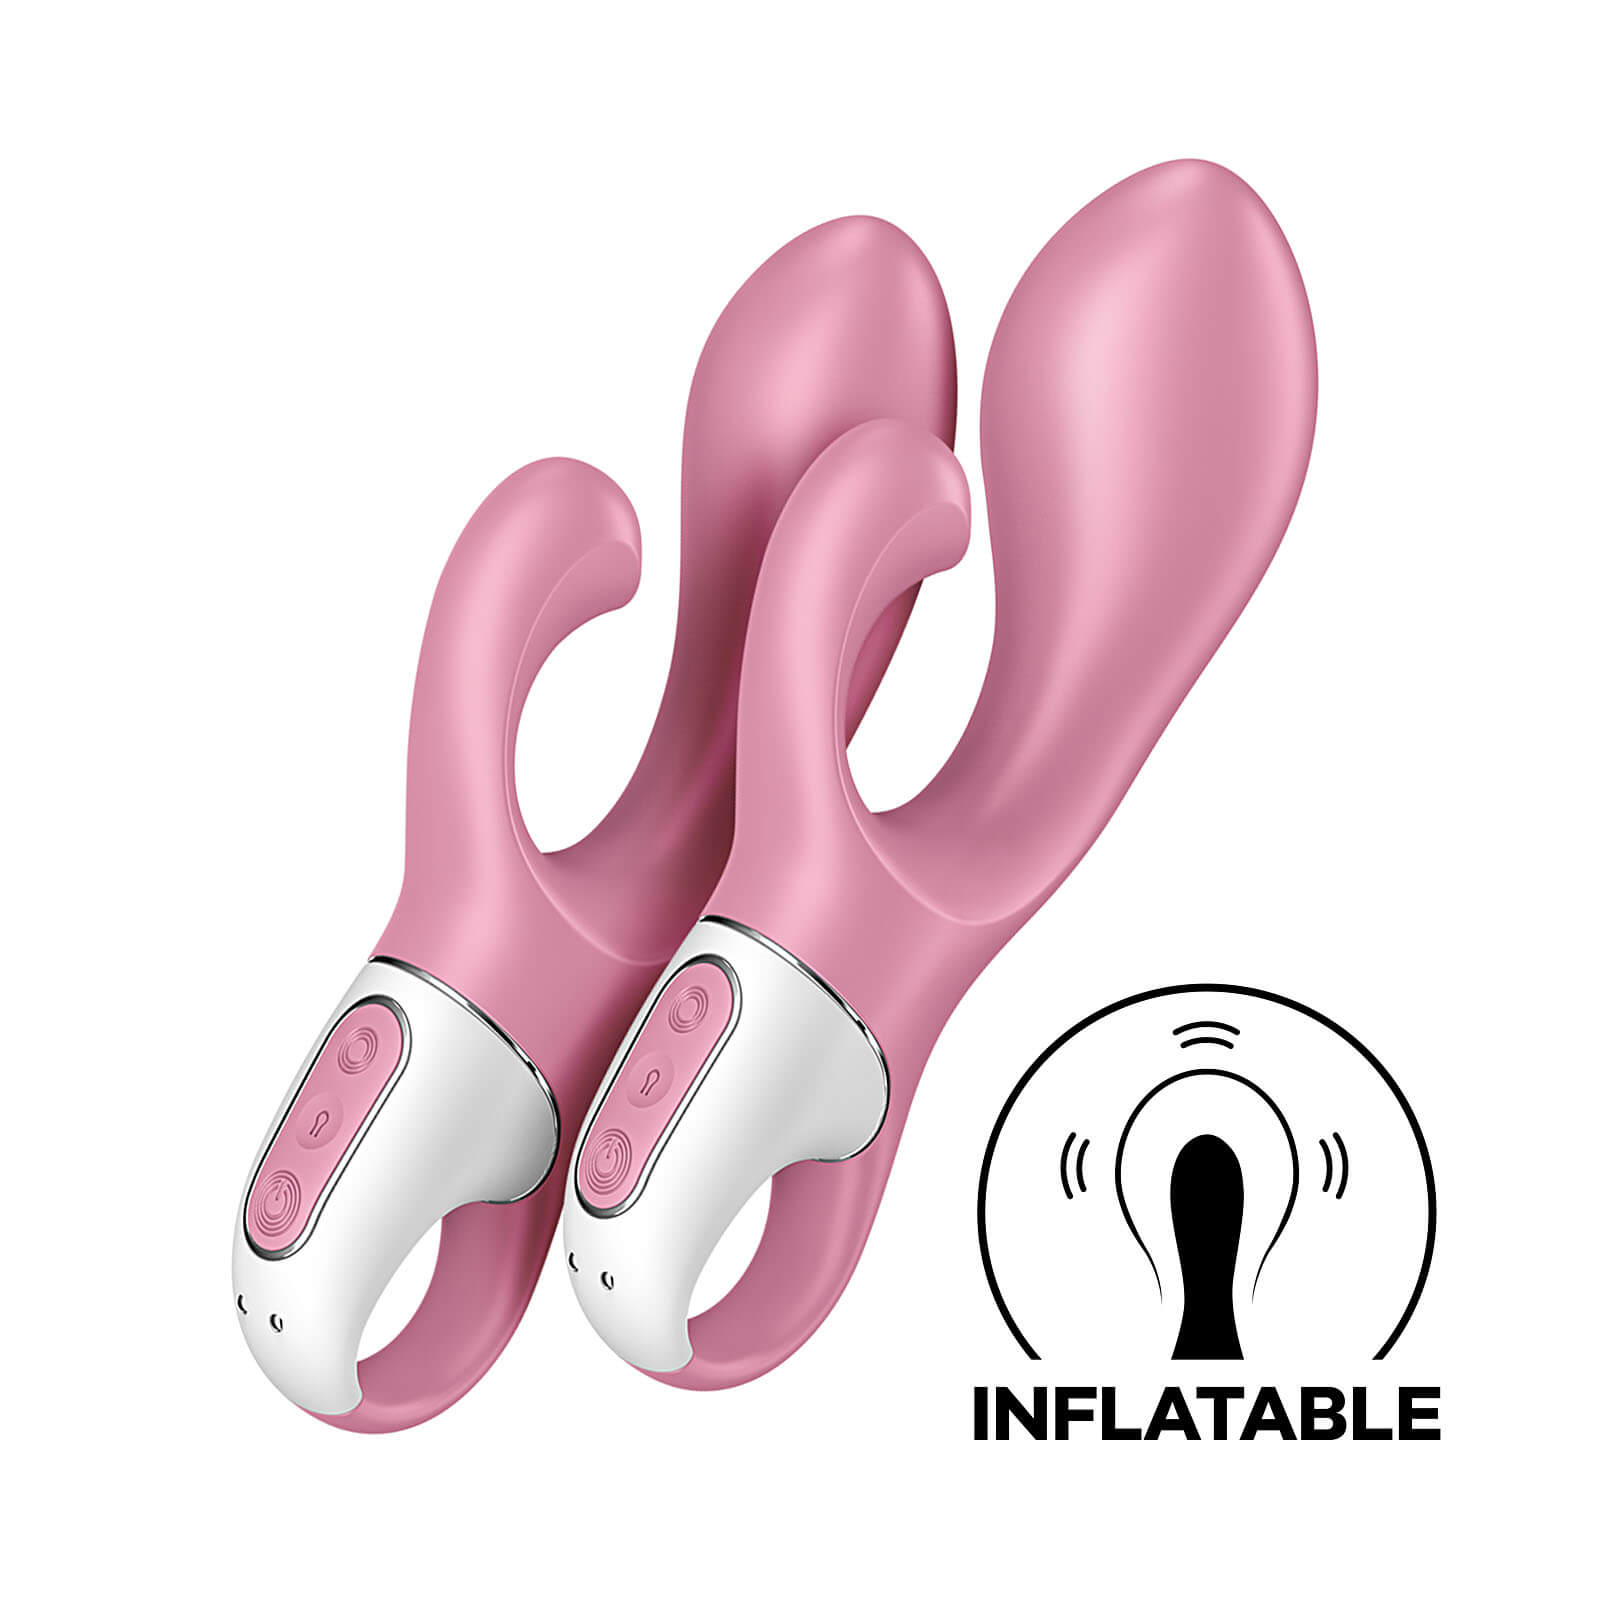 Satisfyer Air Pump Bunny 2 (Pink), inflatable vibrator